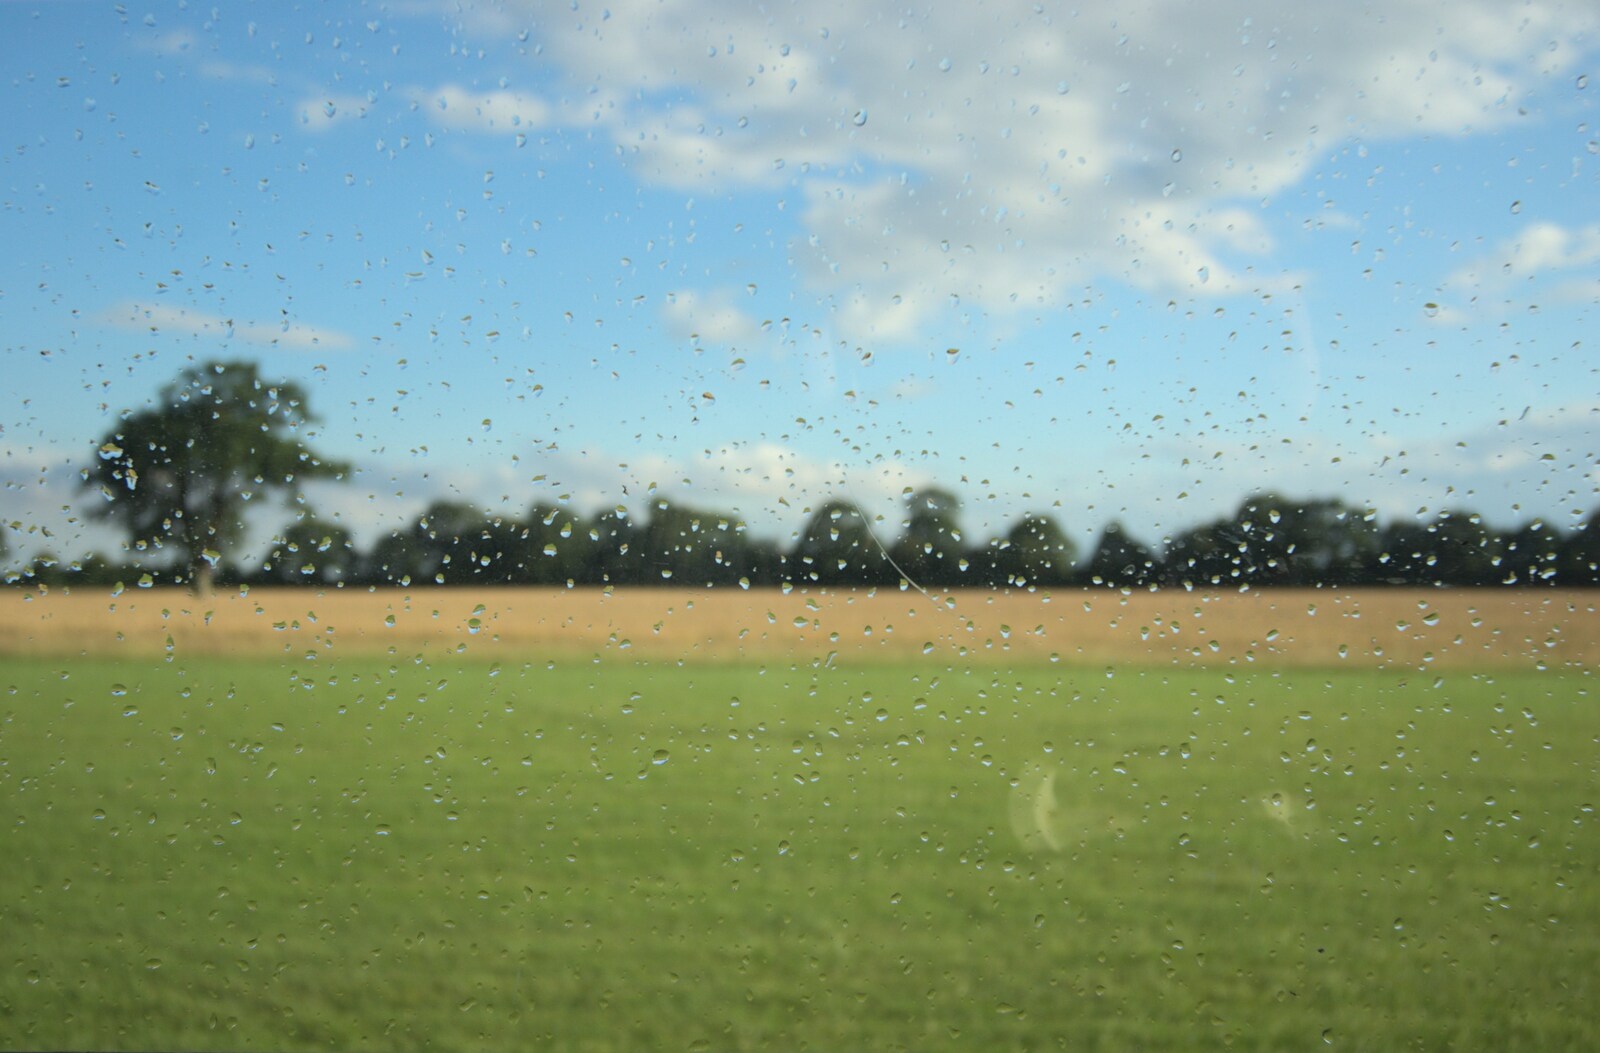 Rain on a window from Maurice's Mustang Hangar Dance, Hardwick Airfield, Norfolk - 16th July 2011